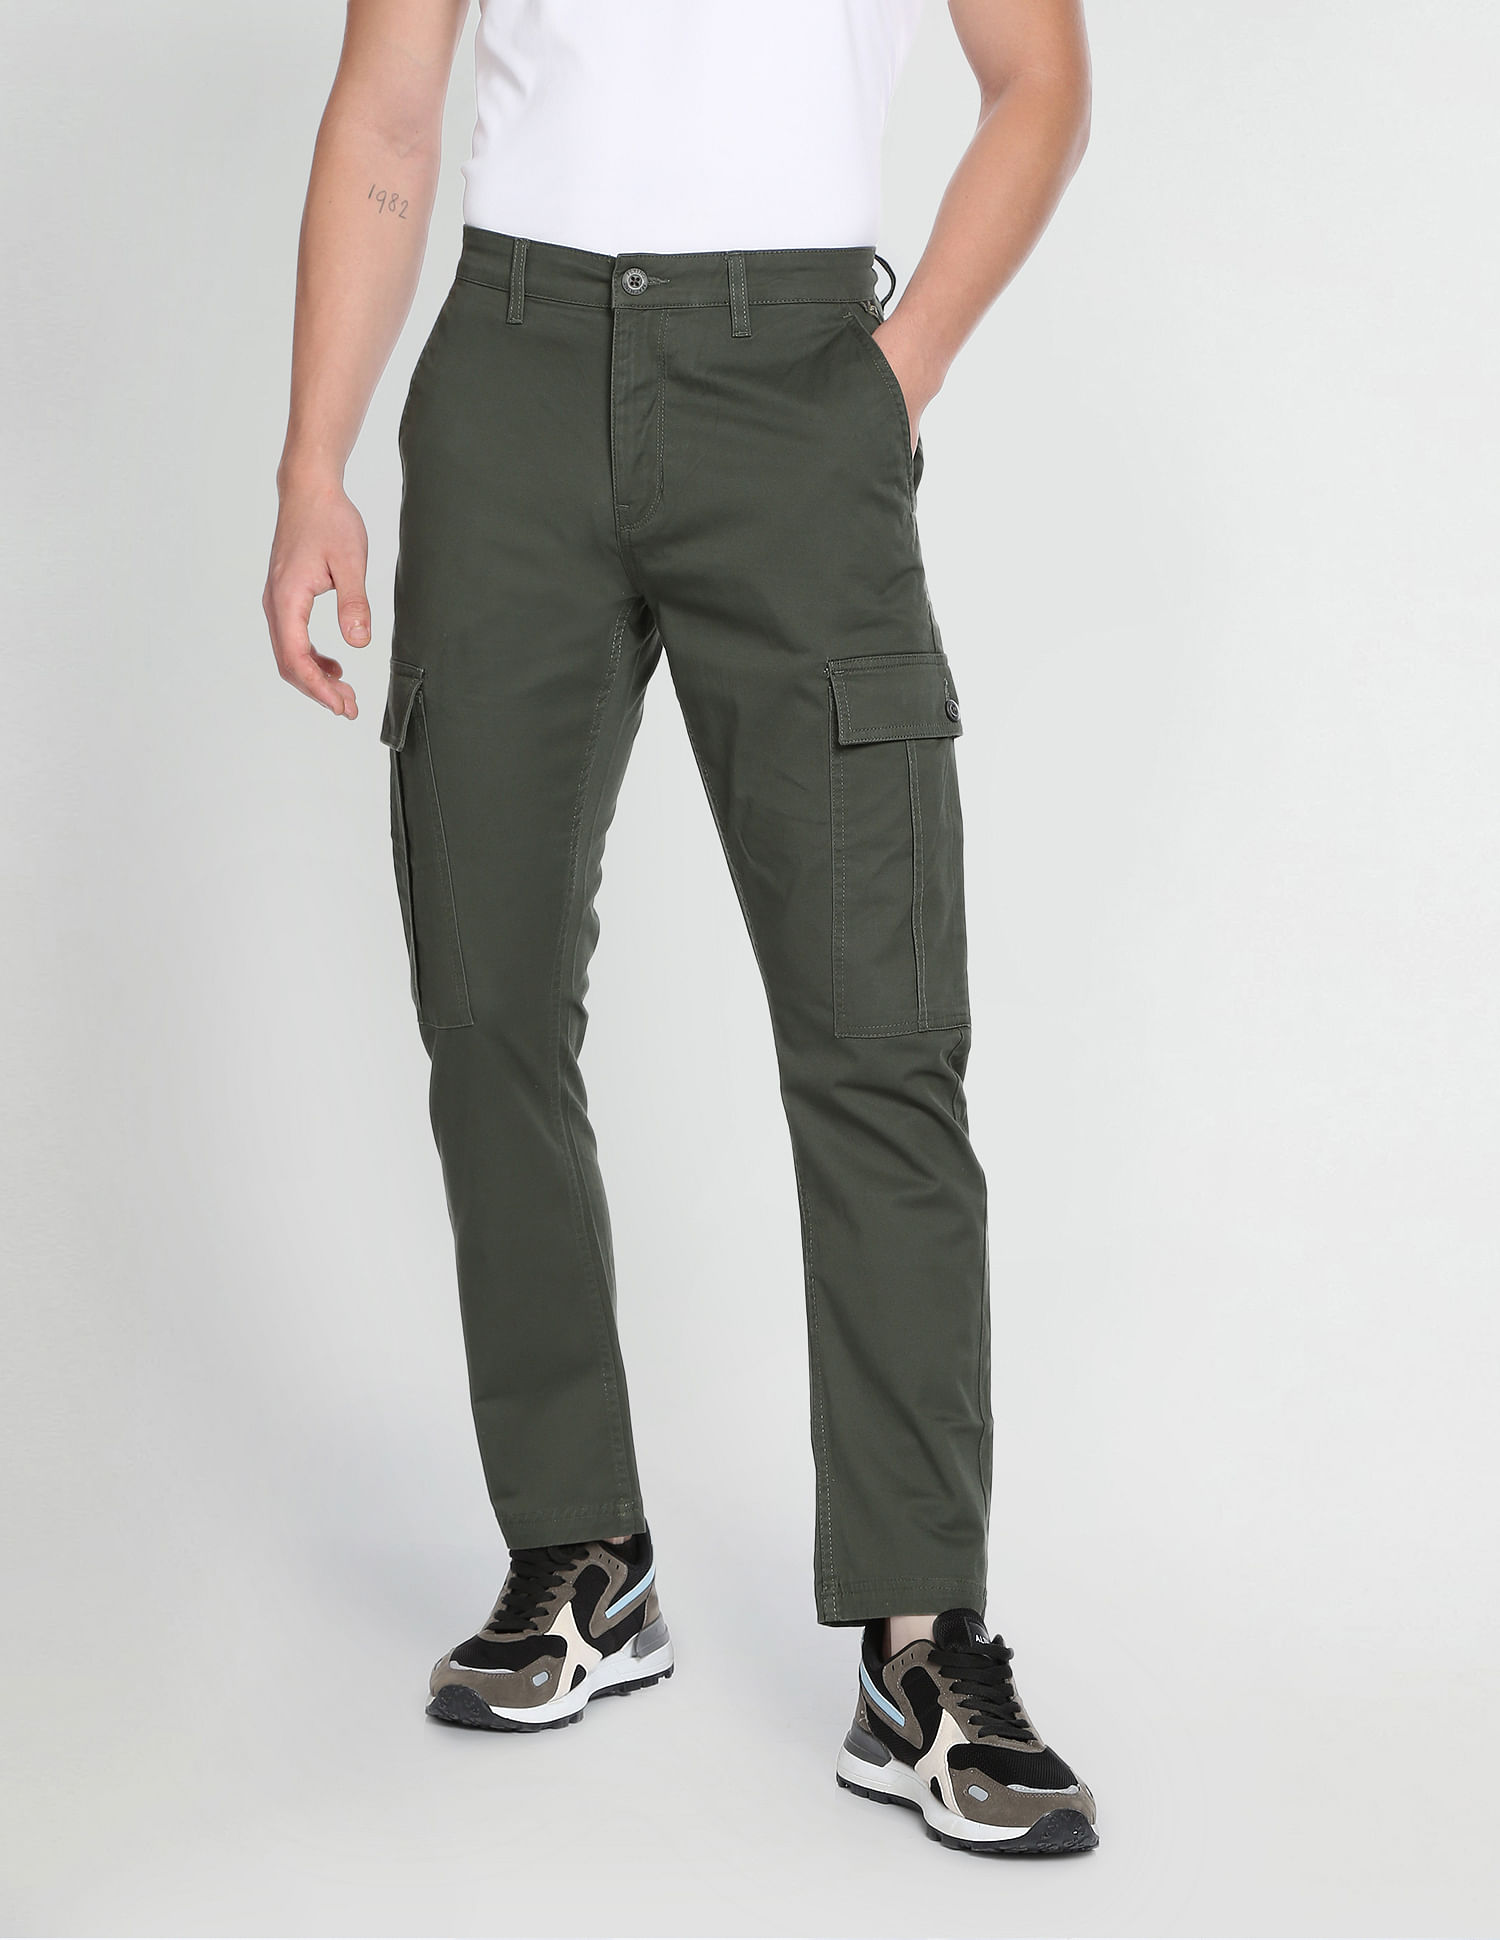 Mens Black Cargo Trousers Fashion Drawstring Hip Hop Harem Cropped Casual  Pants | eBay